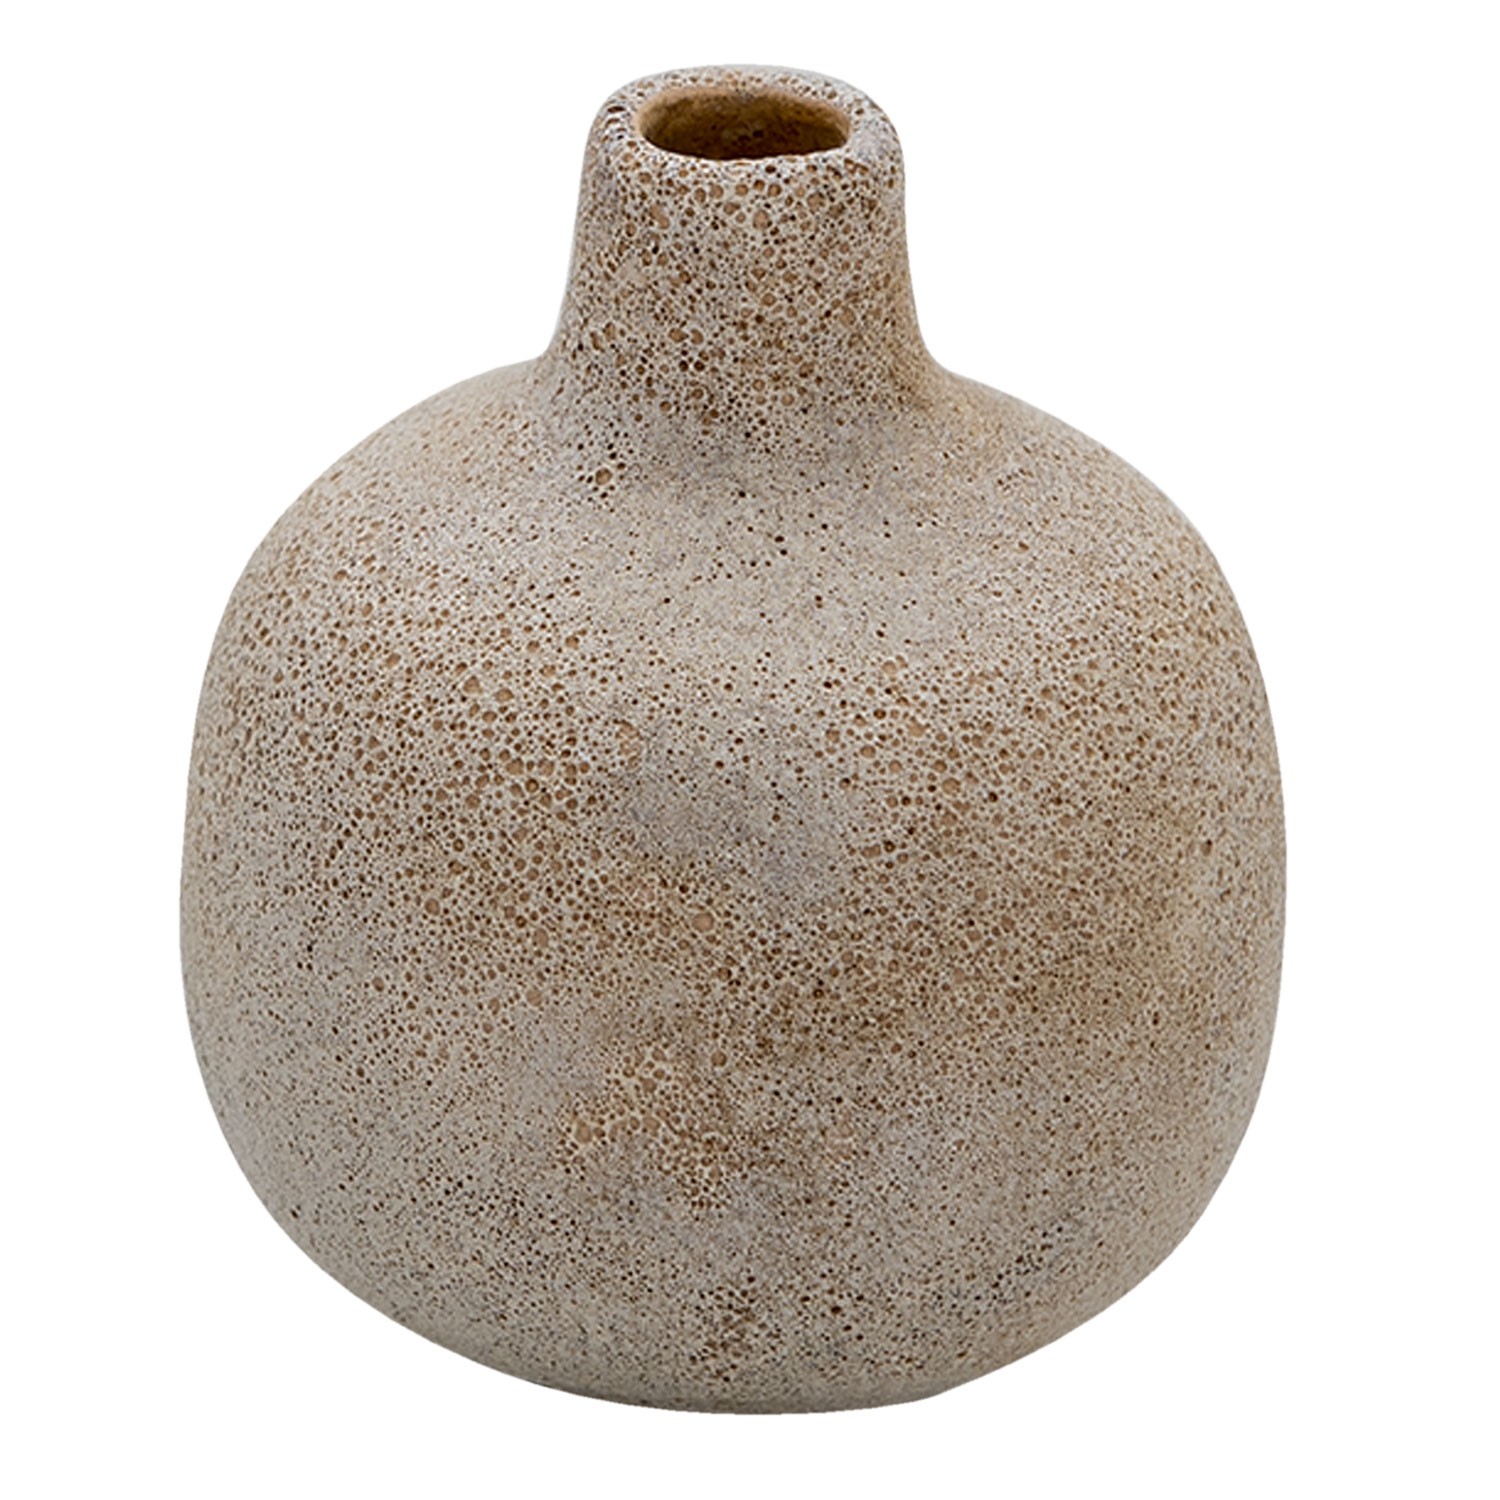 Krémová keramická váza s patinou Annora - Ø 9*9 cm Clayre & Eef